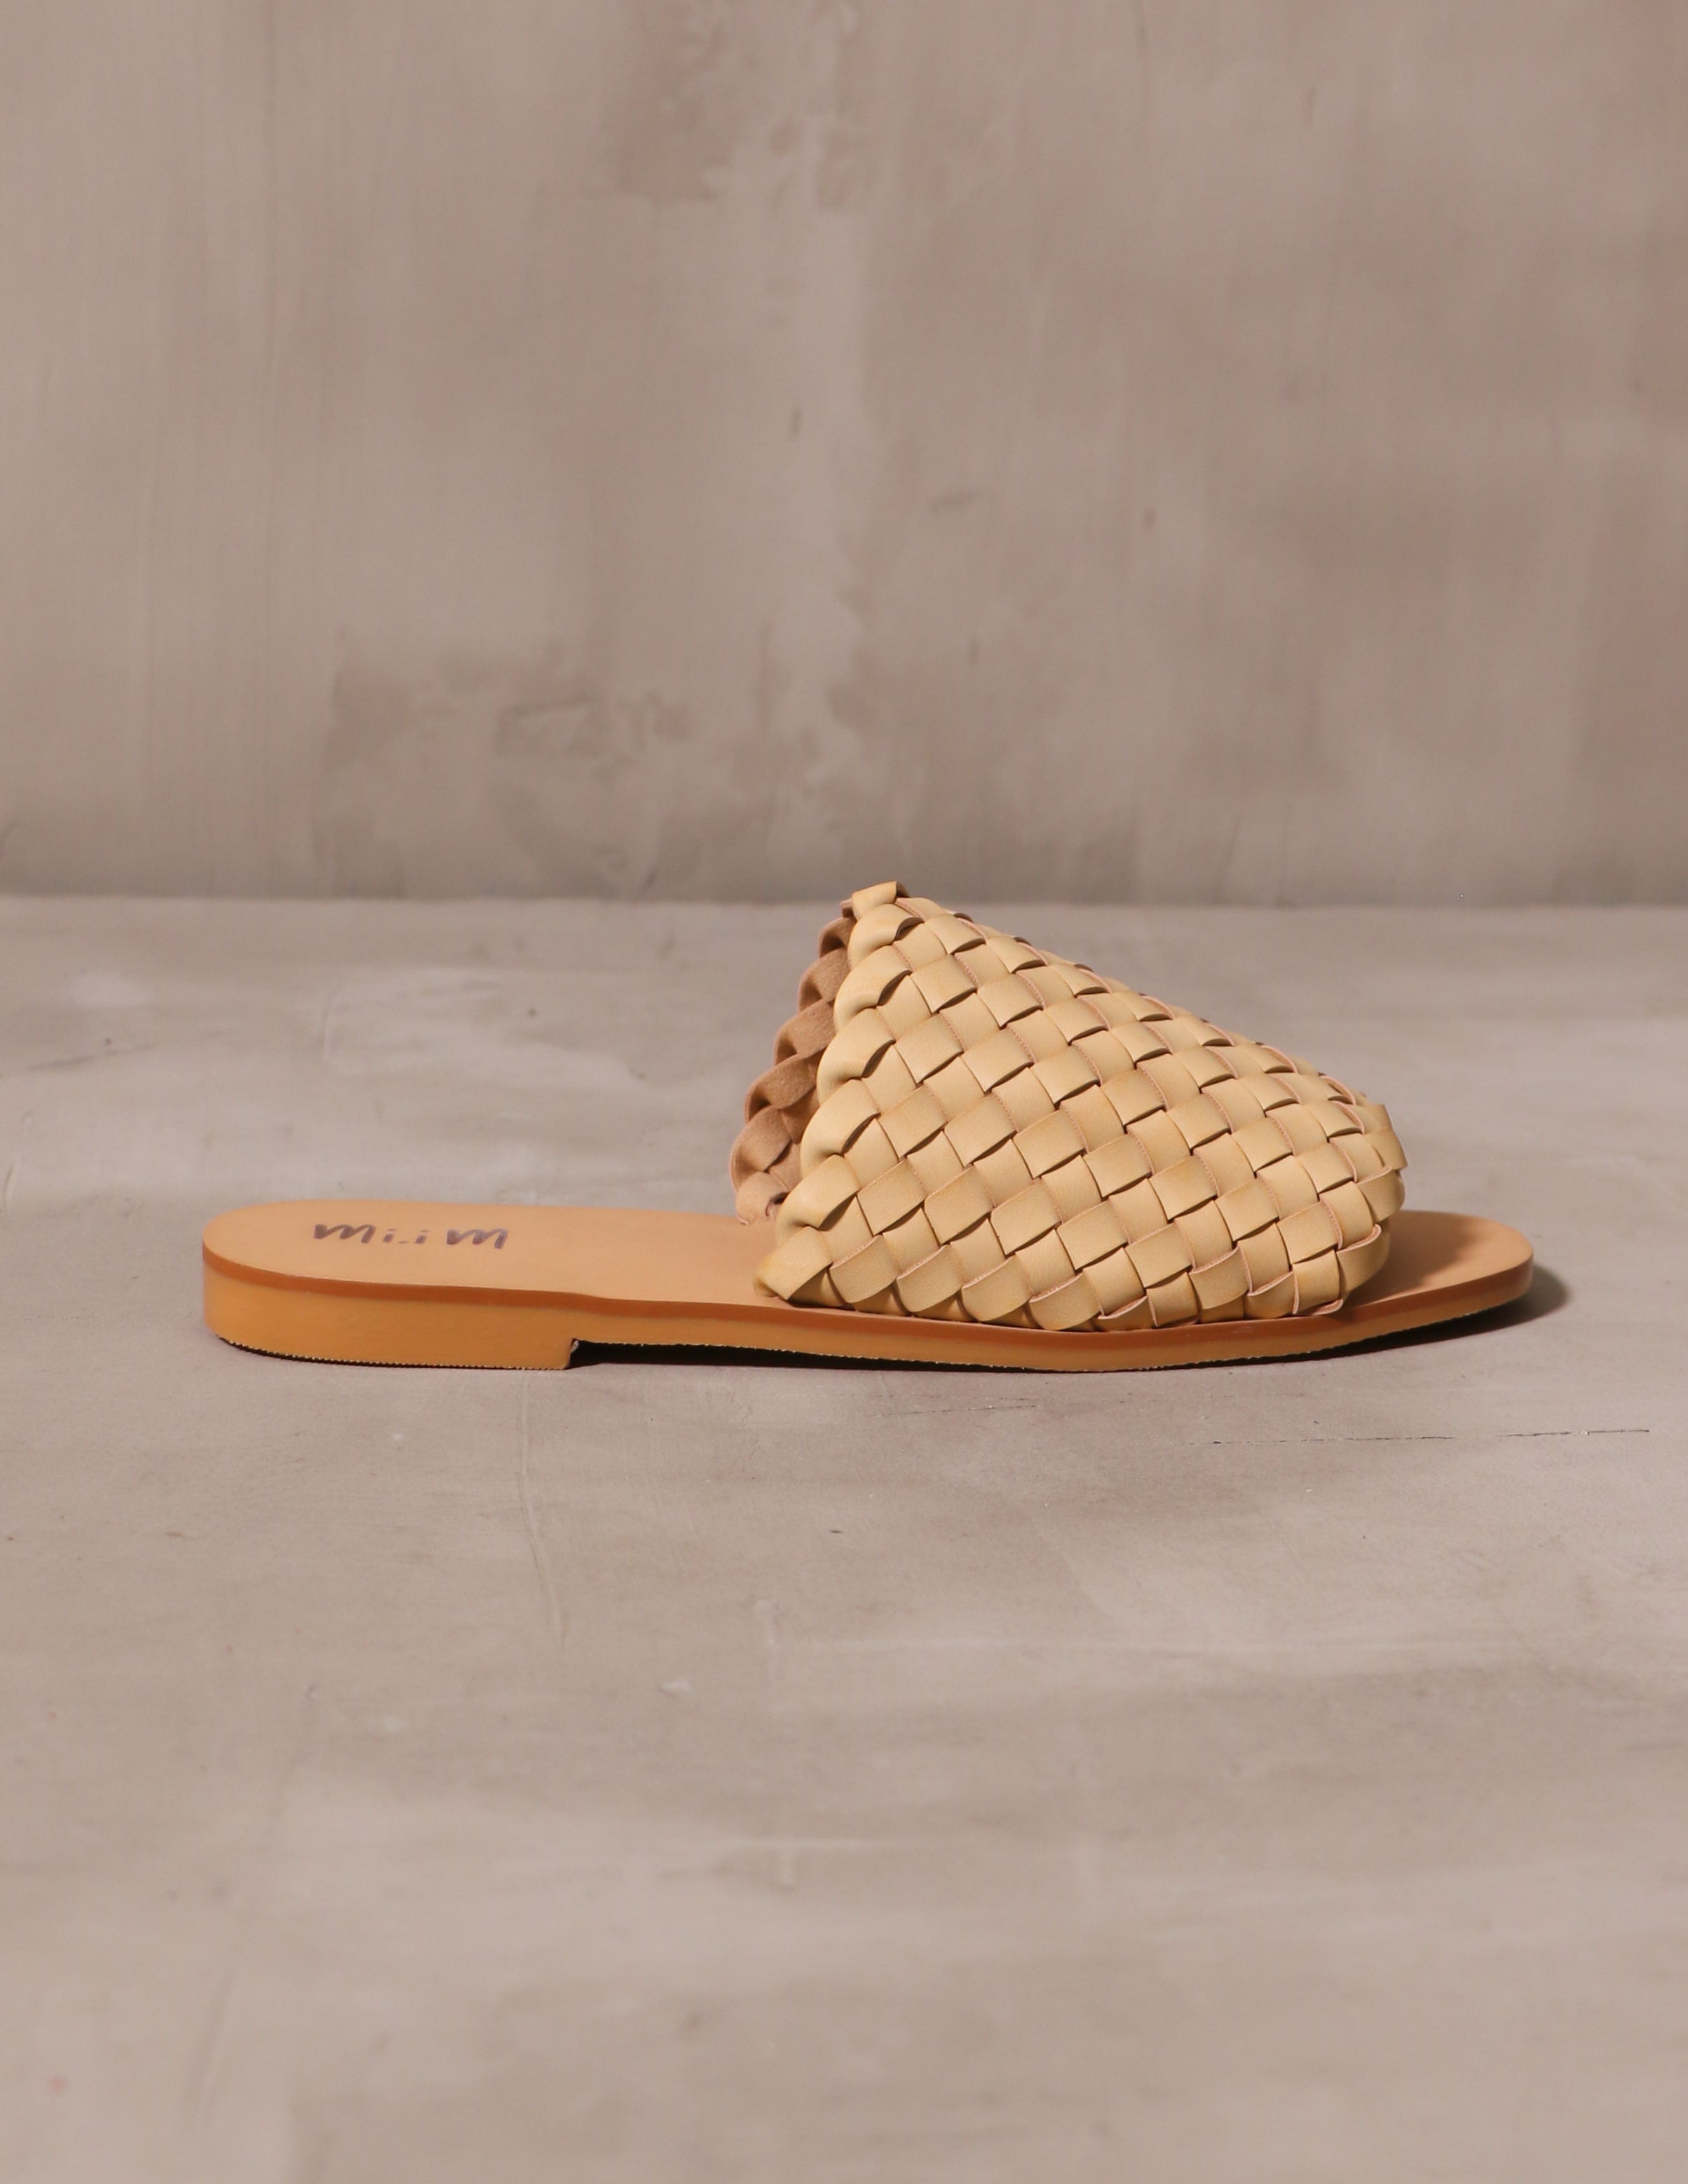 beige woven one slide sandal on cement background